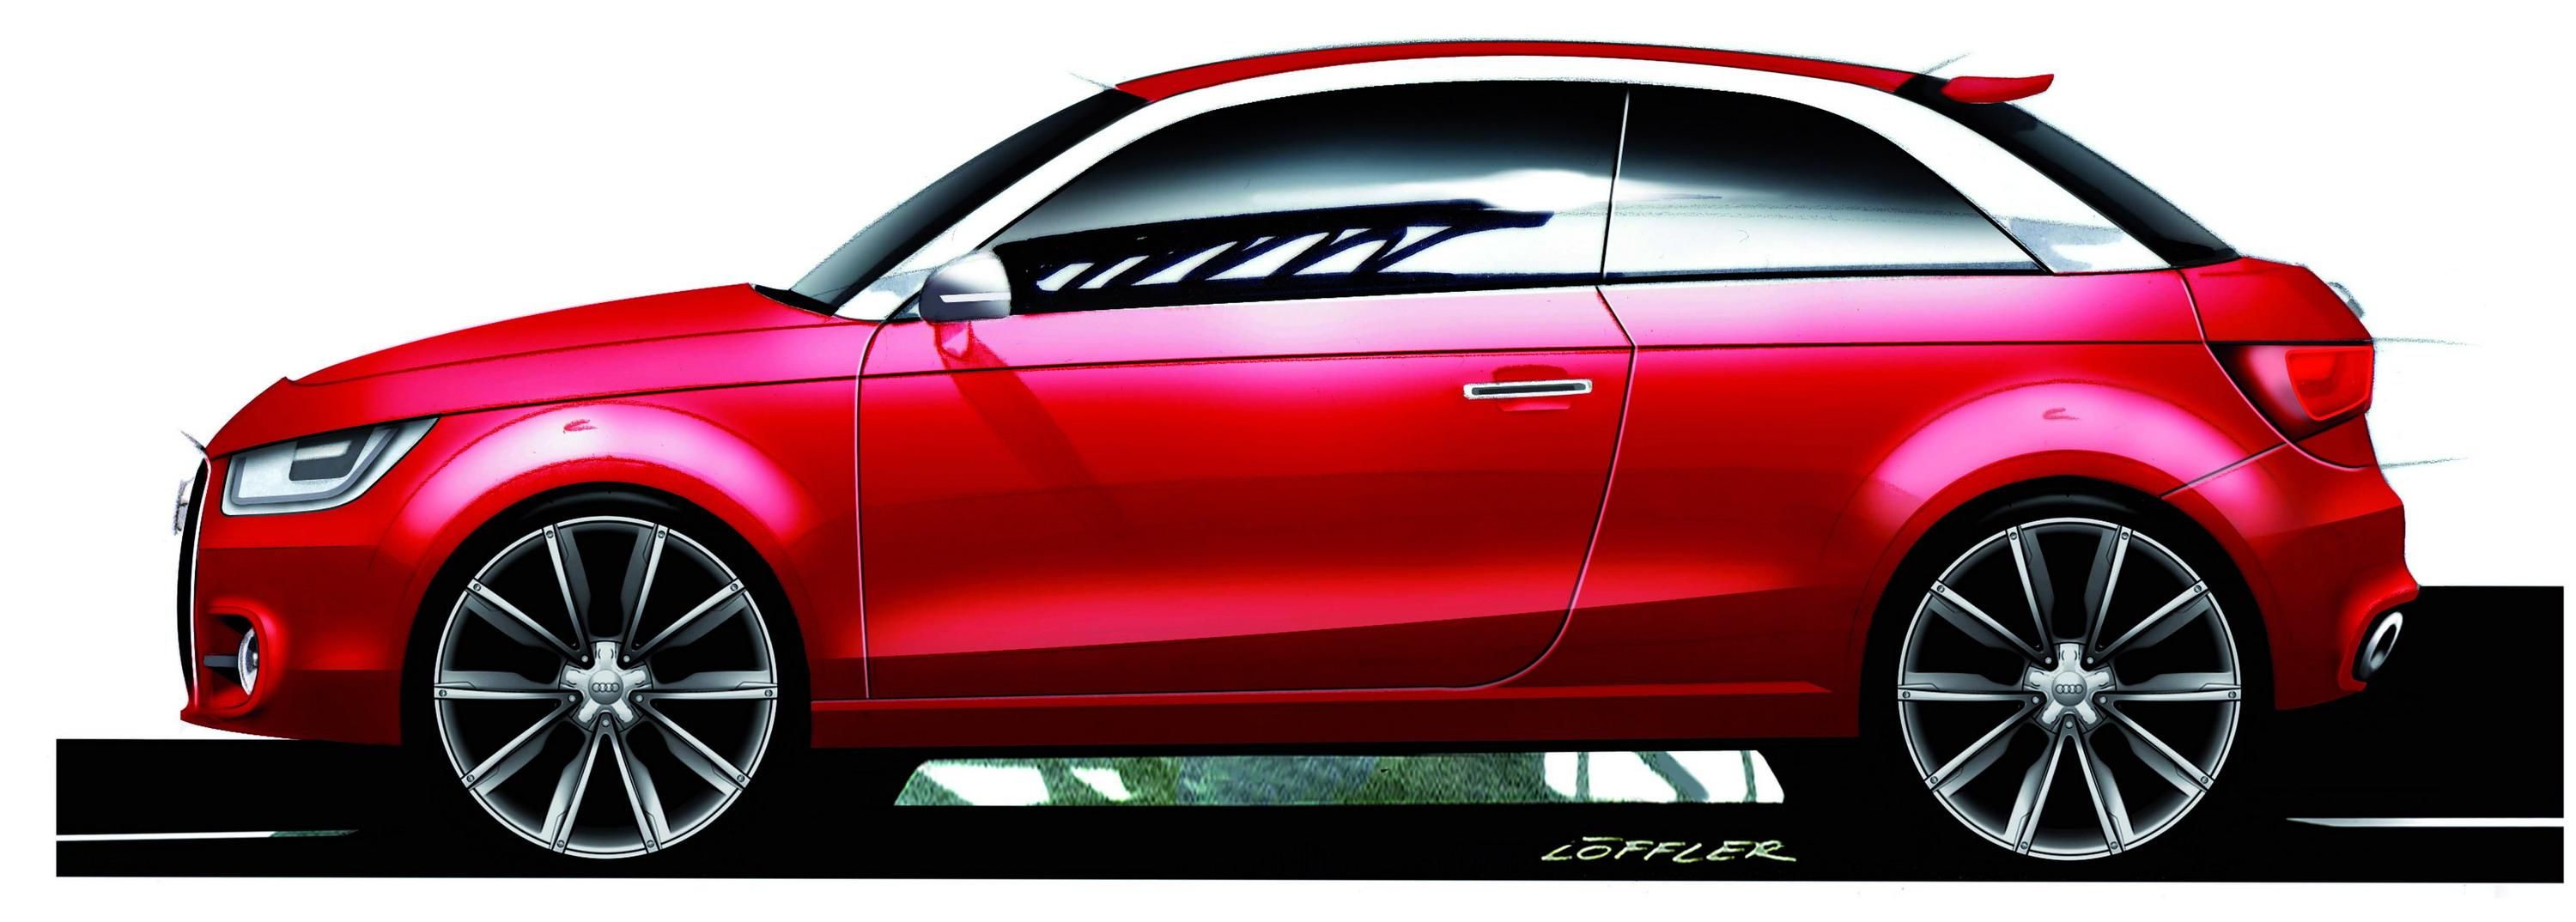 2007 Audi A1 Metroproject Quattro concept